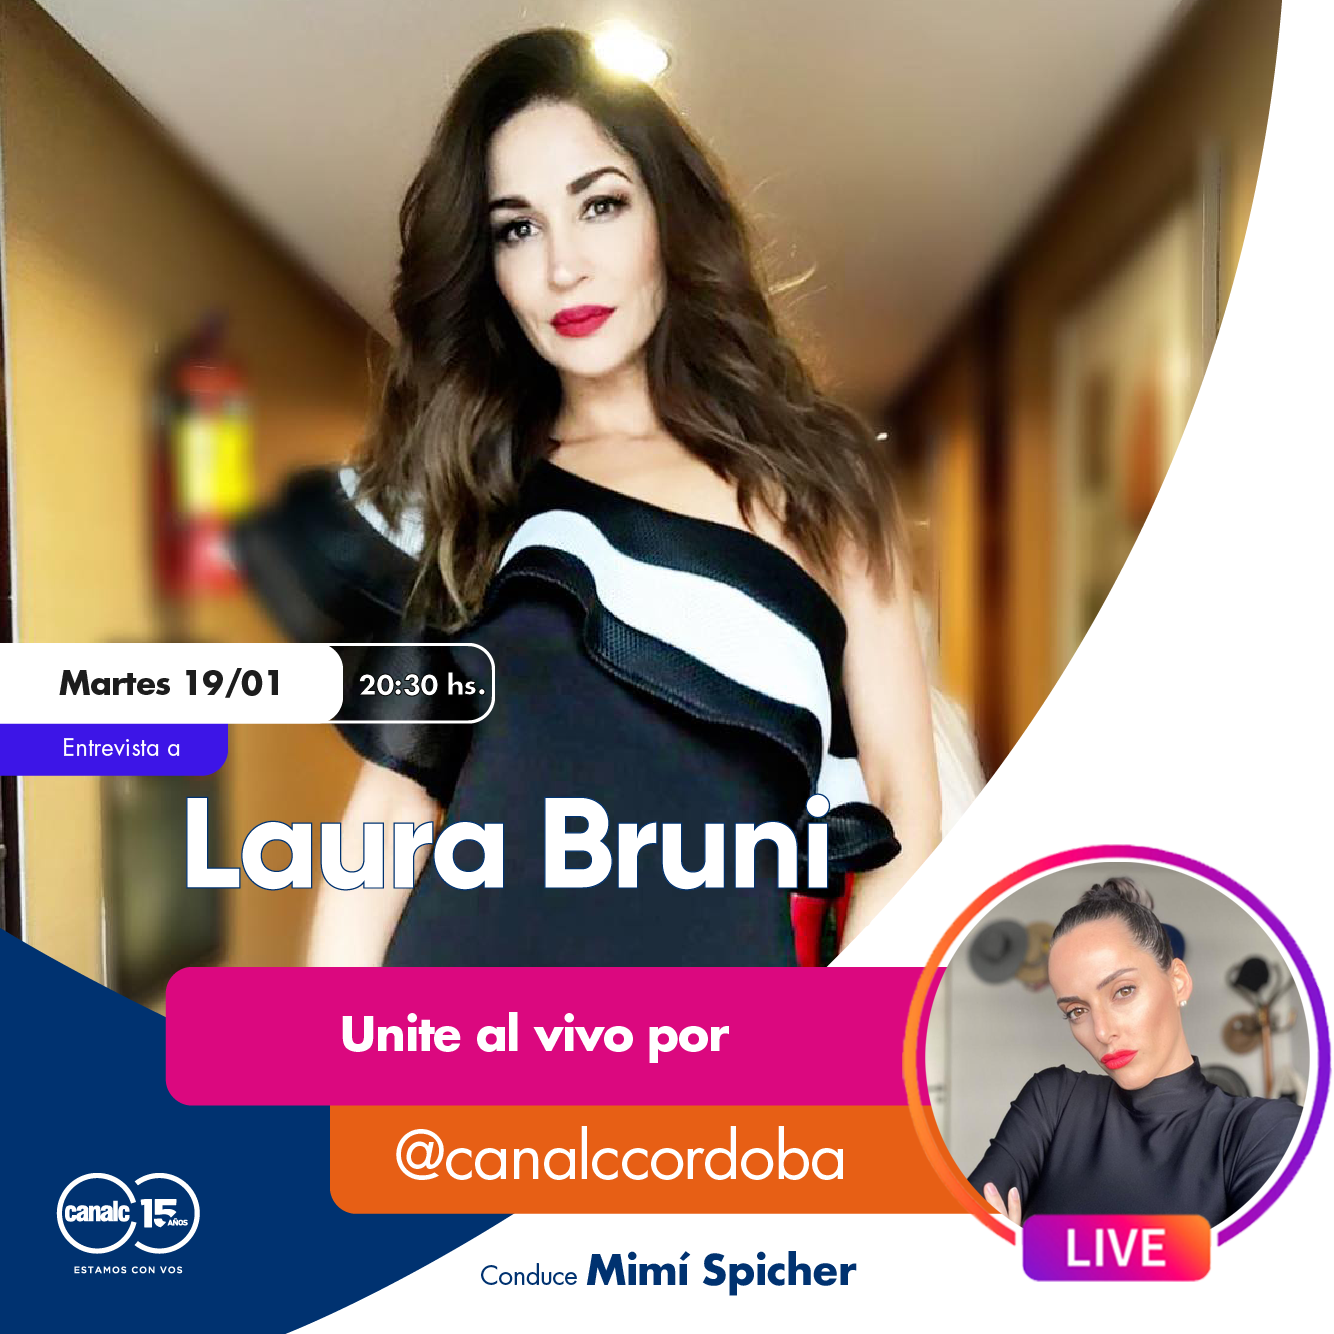 ¡Llega Laura Bruni al Instagram Live de Canal C! • Canal C